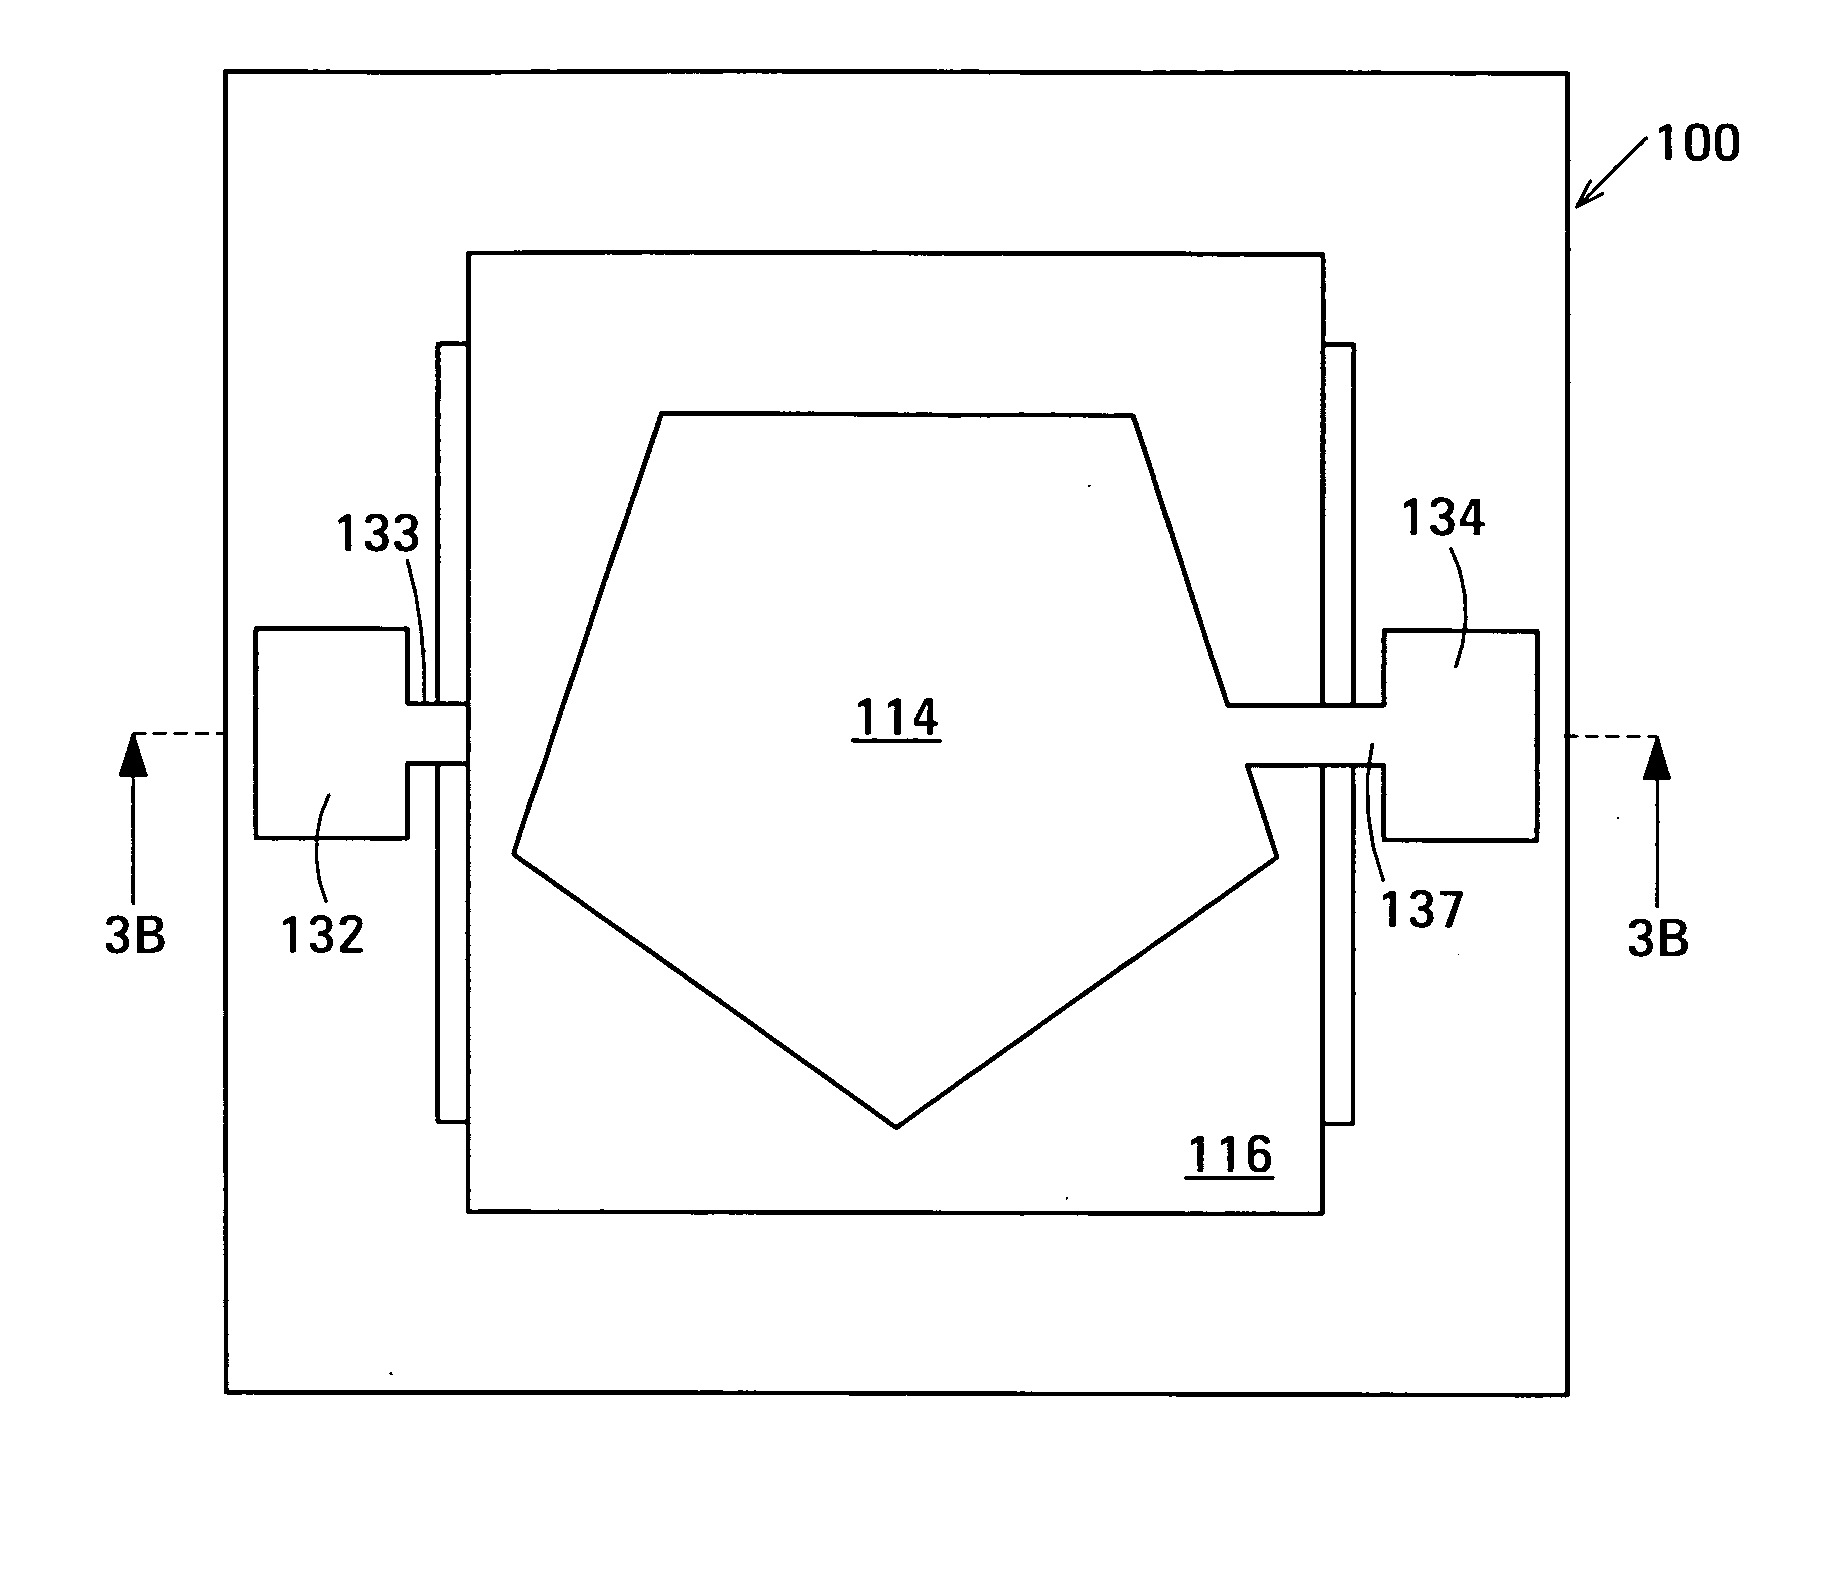 Temperature-compensated film bulk acoustic resonator (FBAR) devices